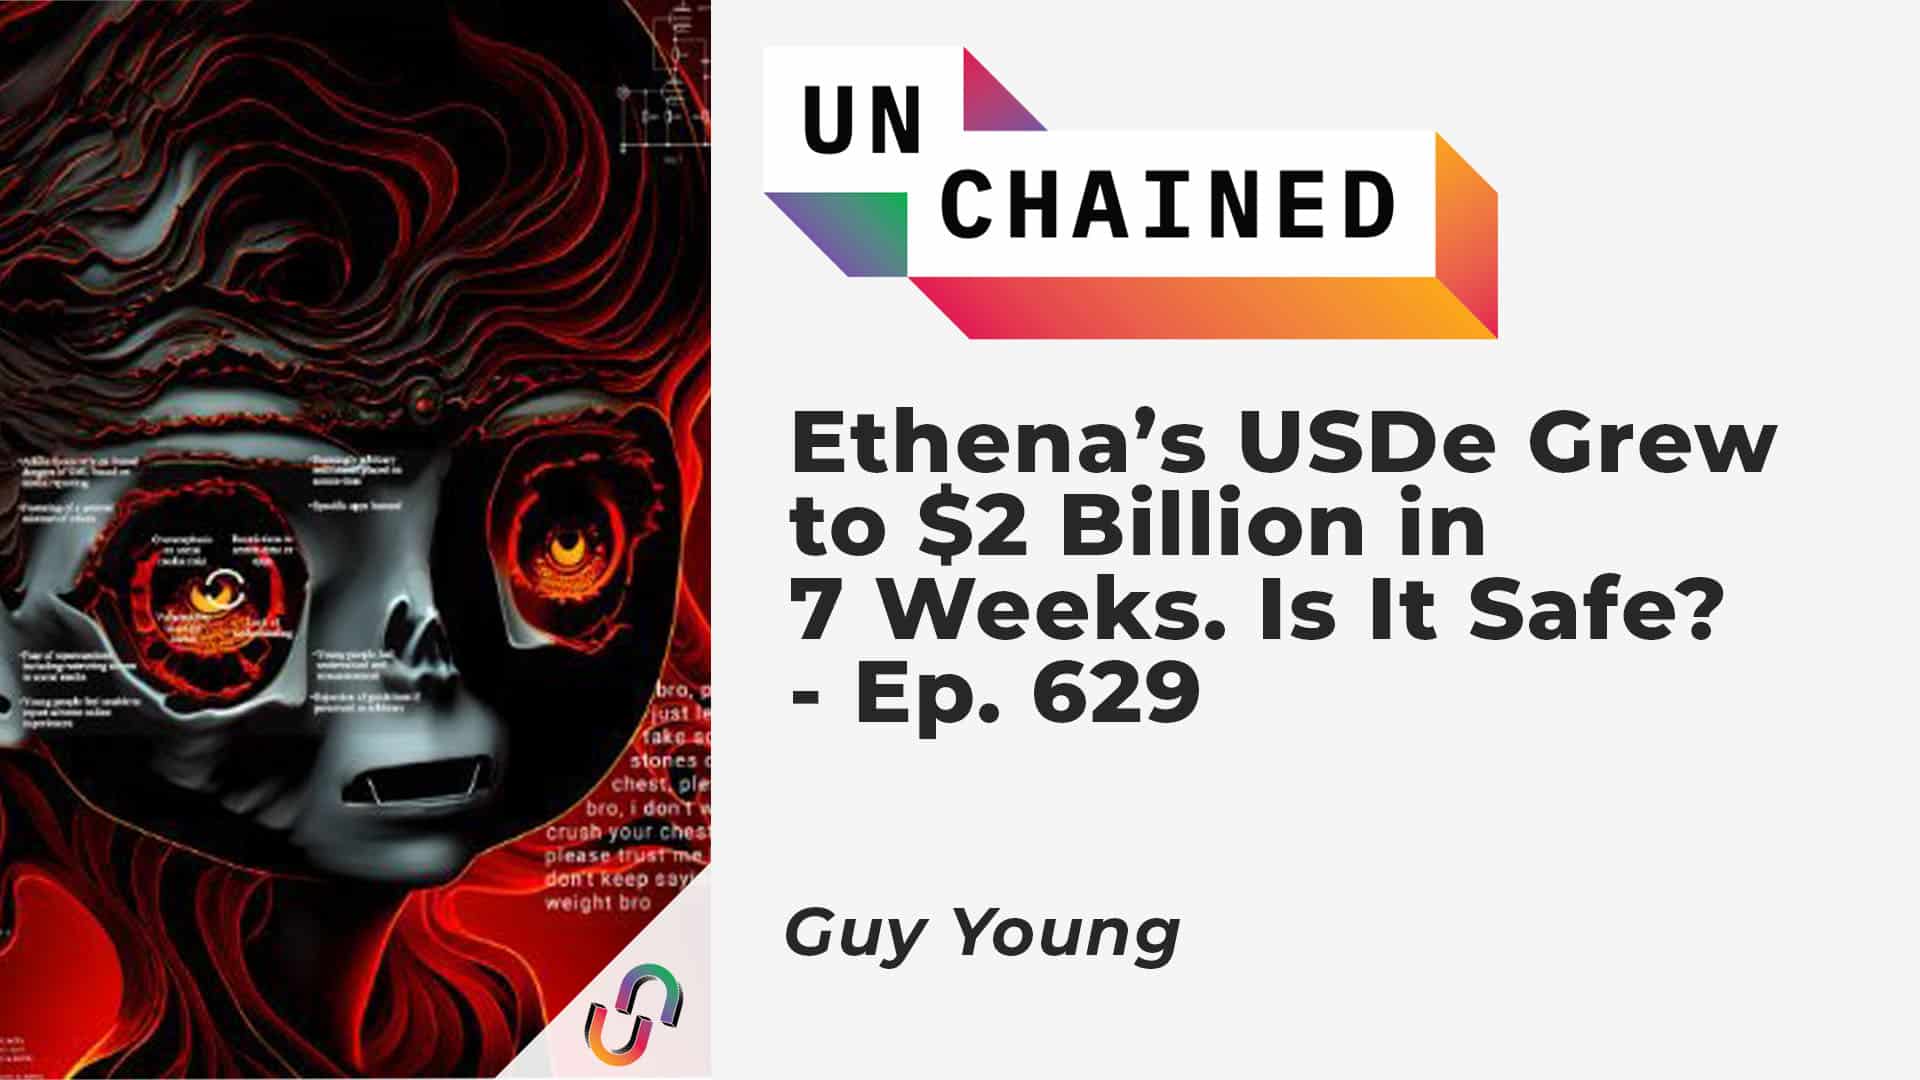 Ethena’s USDe Grew to $2 Billion in 7 Weeks. Is It Safe? - Ep. 629